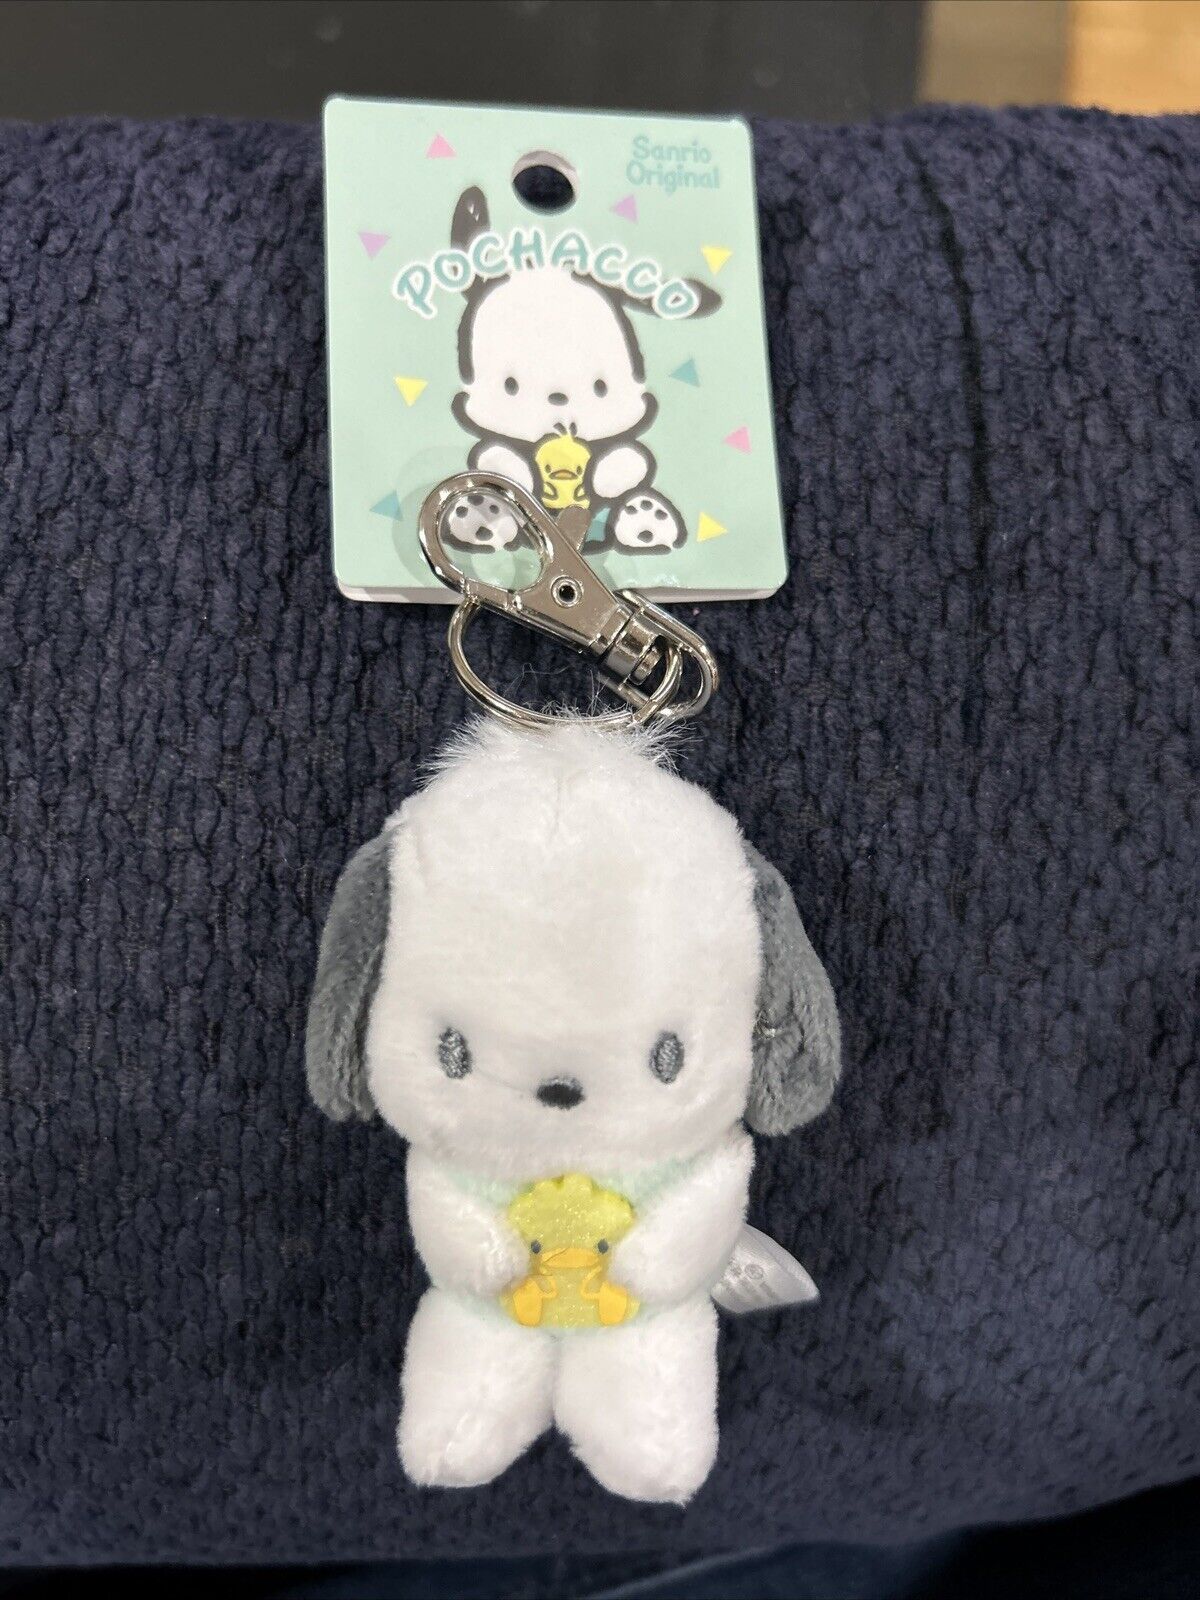 Plush Toy 2” Keychain Sanrio Pochacco Backpack Bag Keyring Hello Kitty NWT Rare